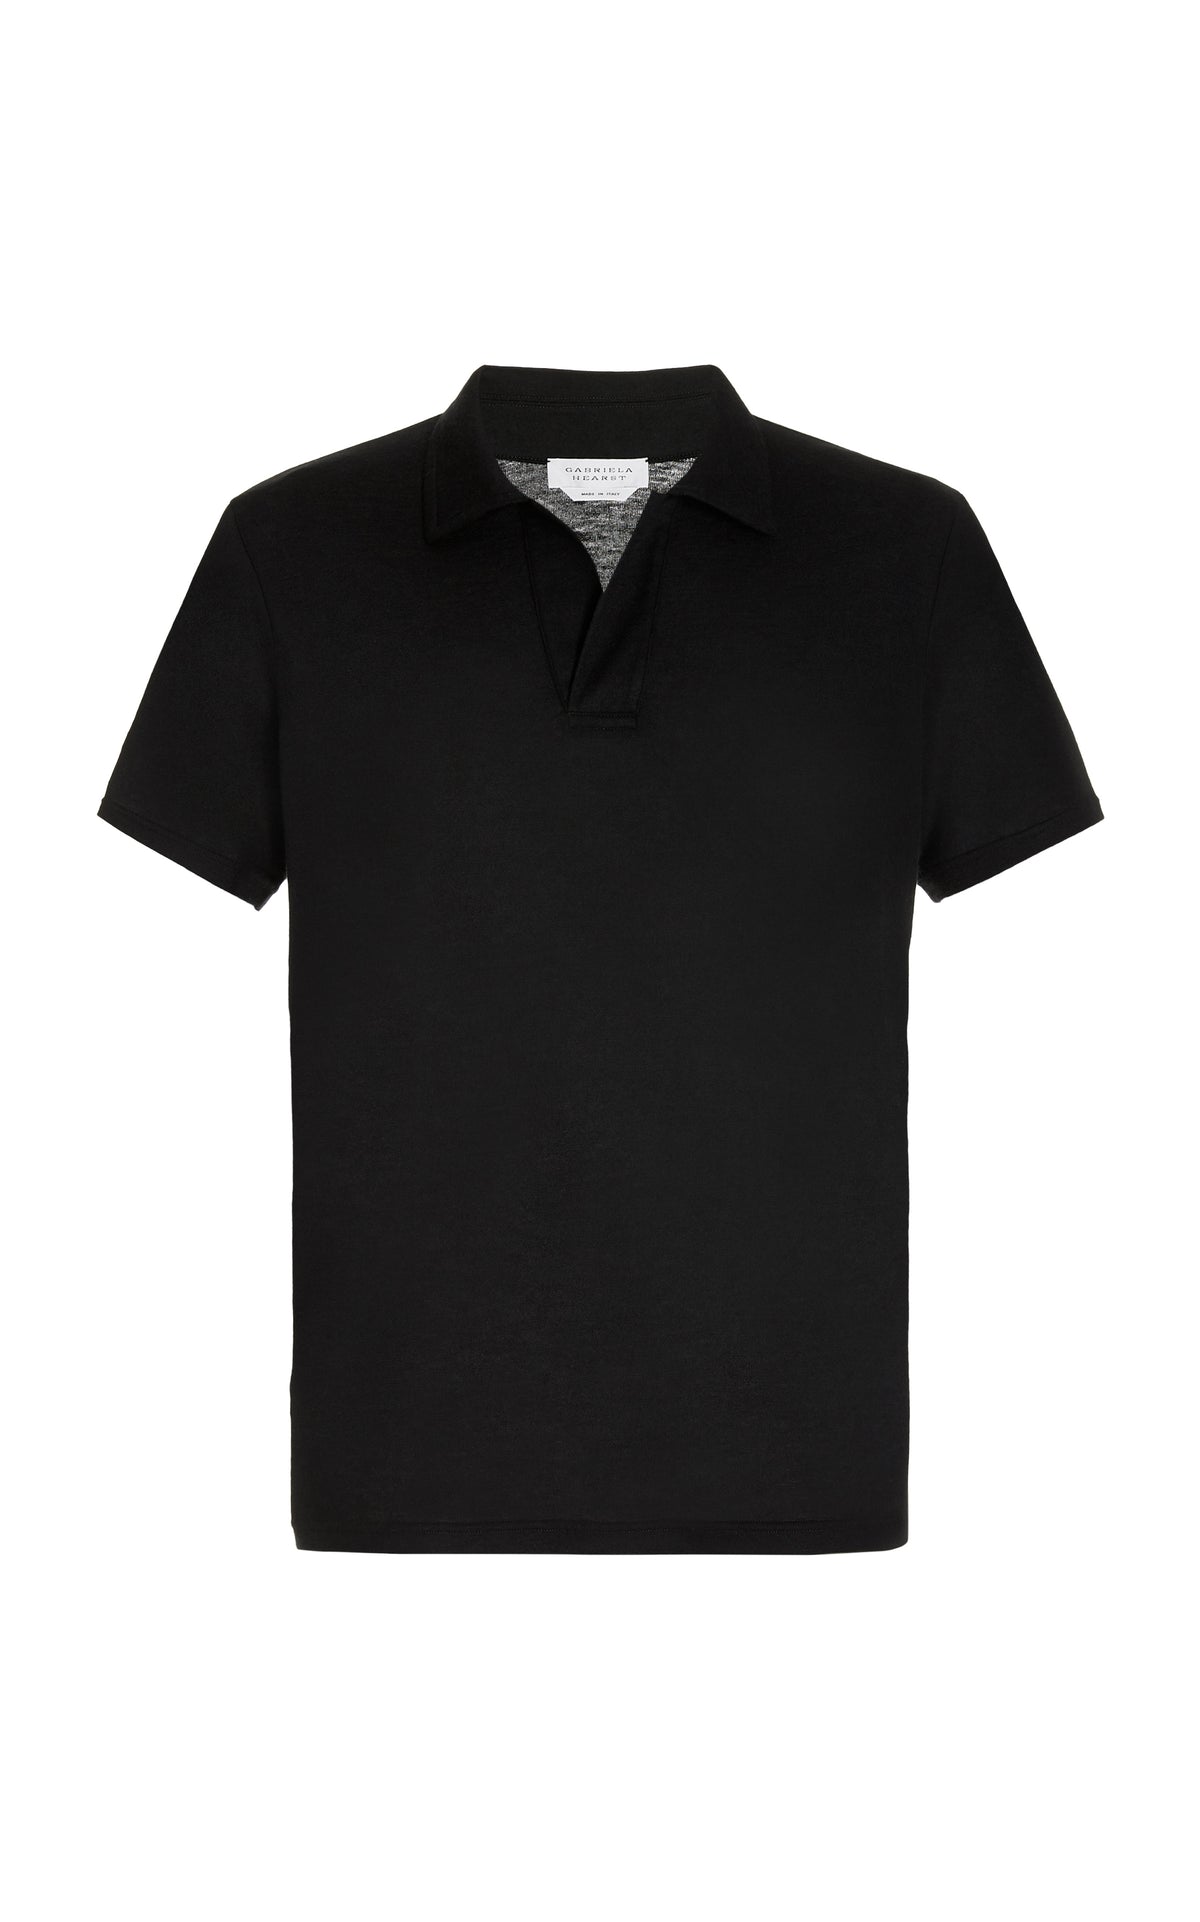 Jaime Short Sleeve Polo in Black Cotton